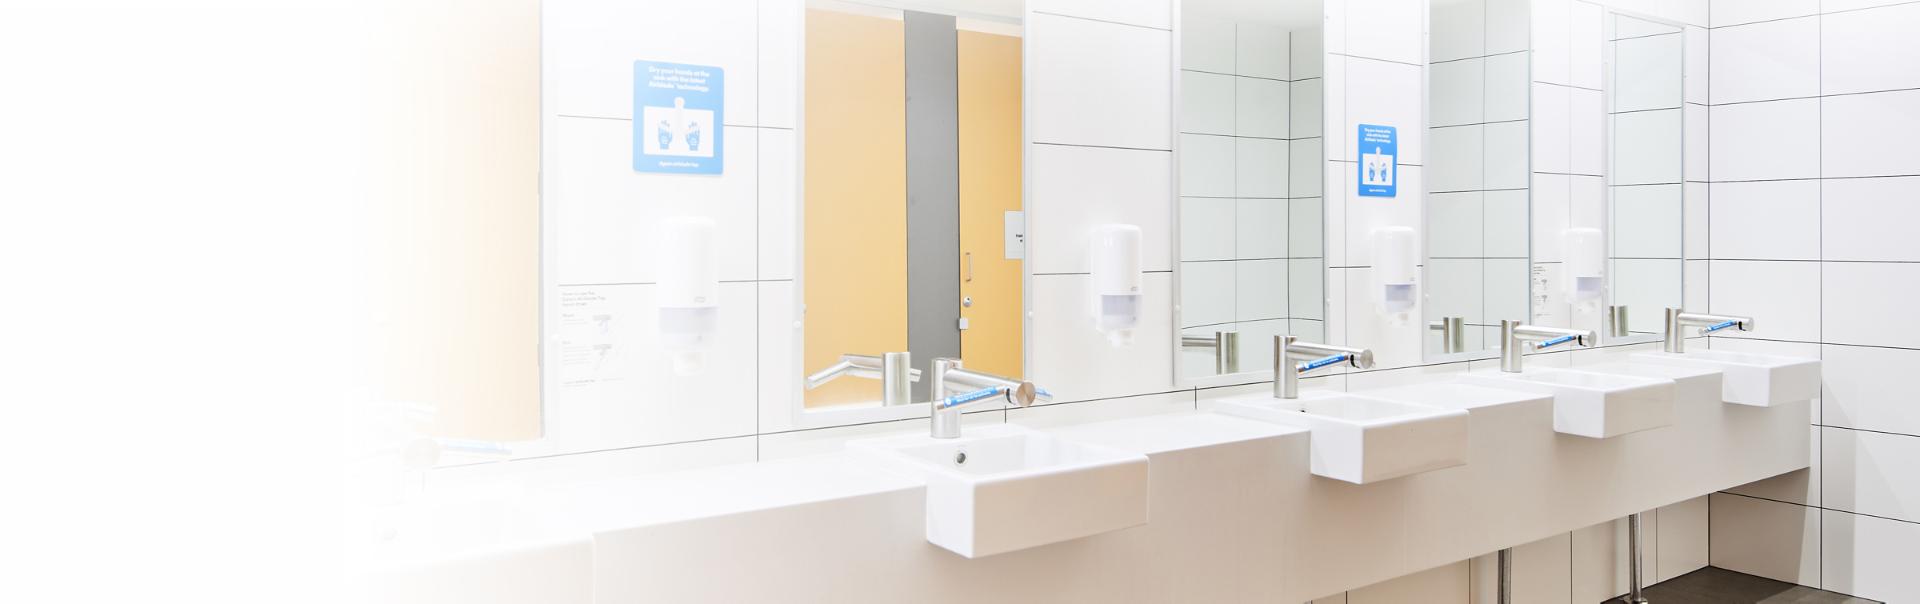 University of Western Australia bathroom using Dyson hand dryers